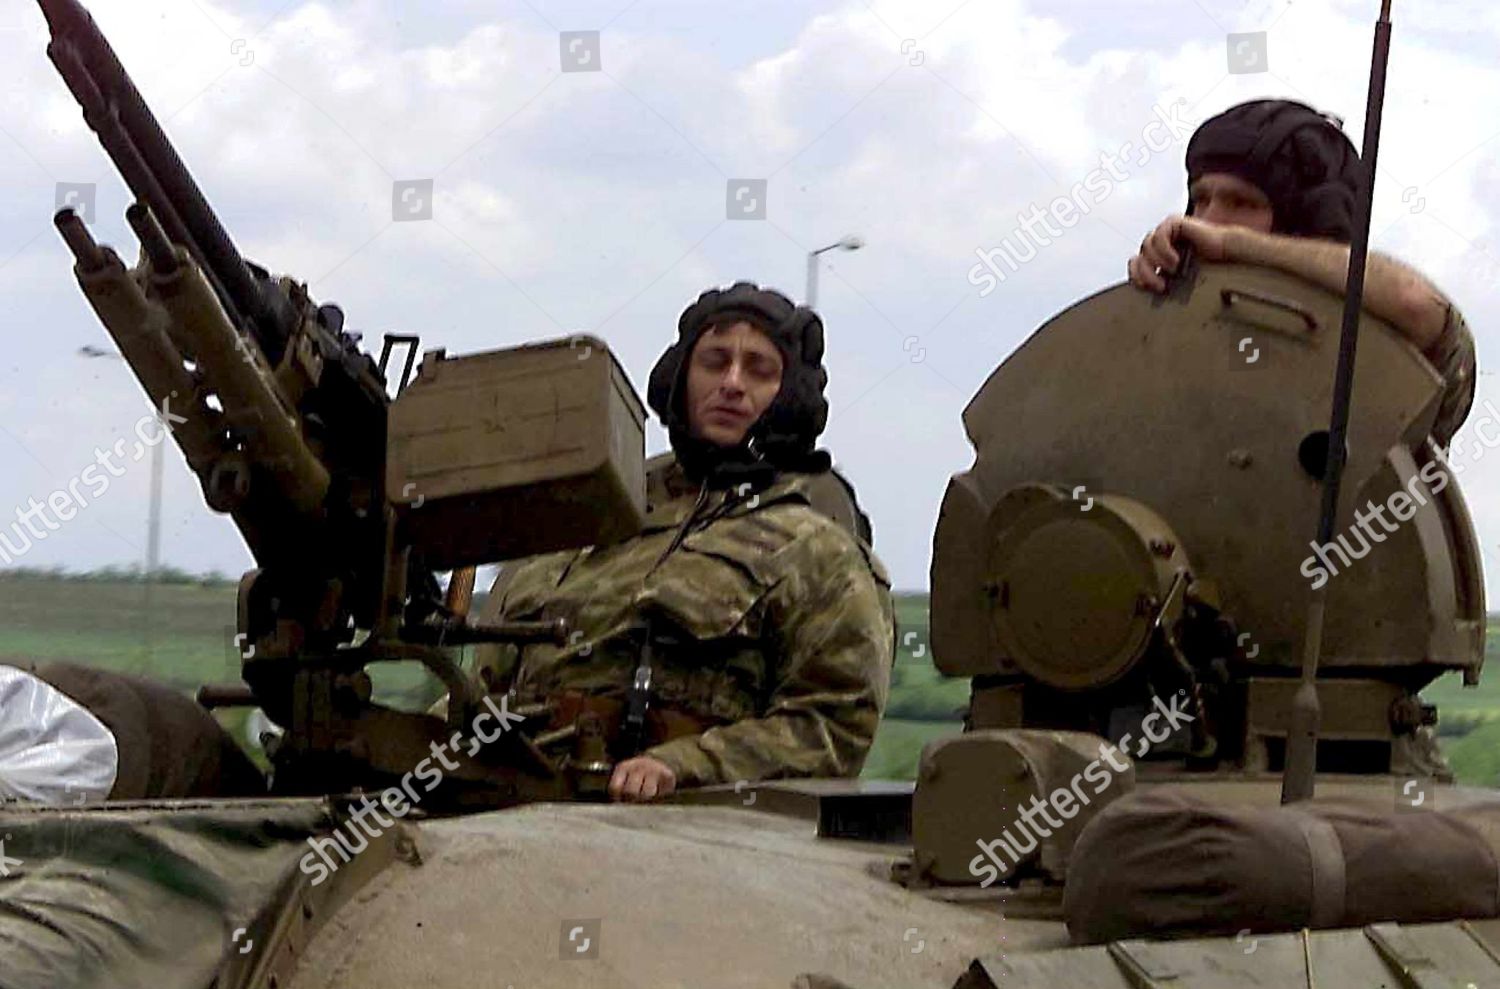 macedonia-tanks-may-2001-shutterstock-editorial-8482407a.jpg